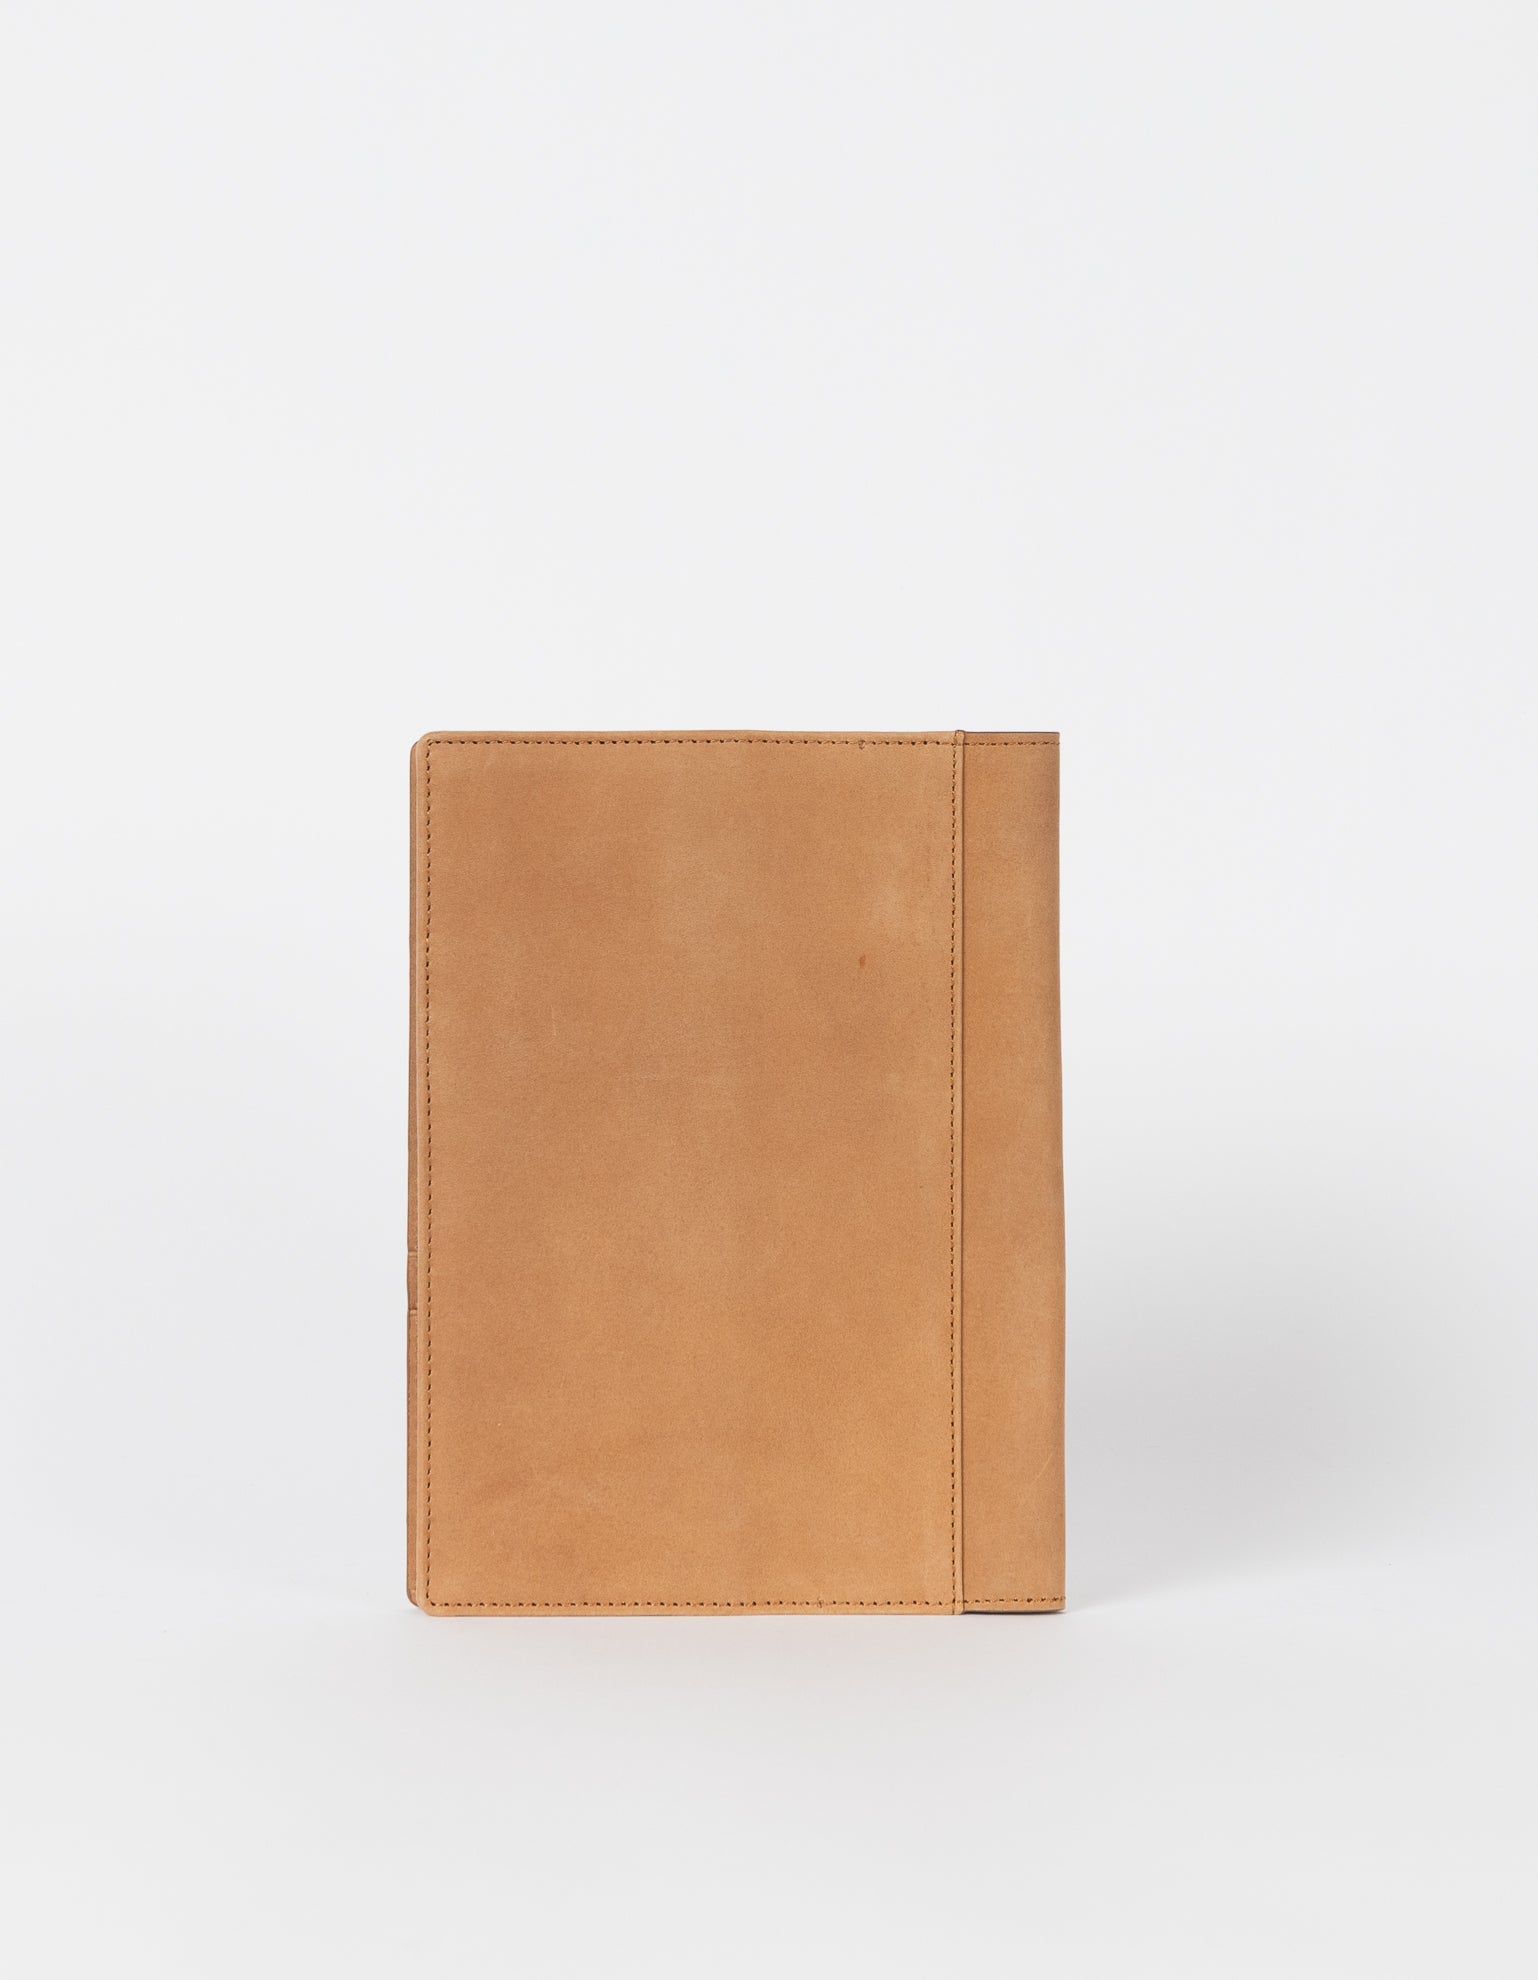 Notebook Camel Hunter Leather. Medium sized notepad cover. Back product image.